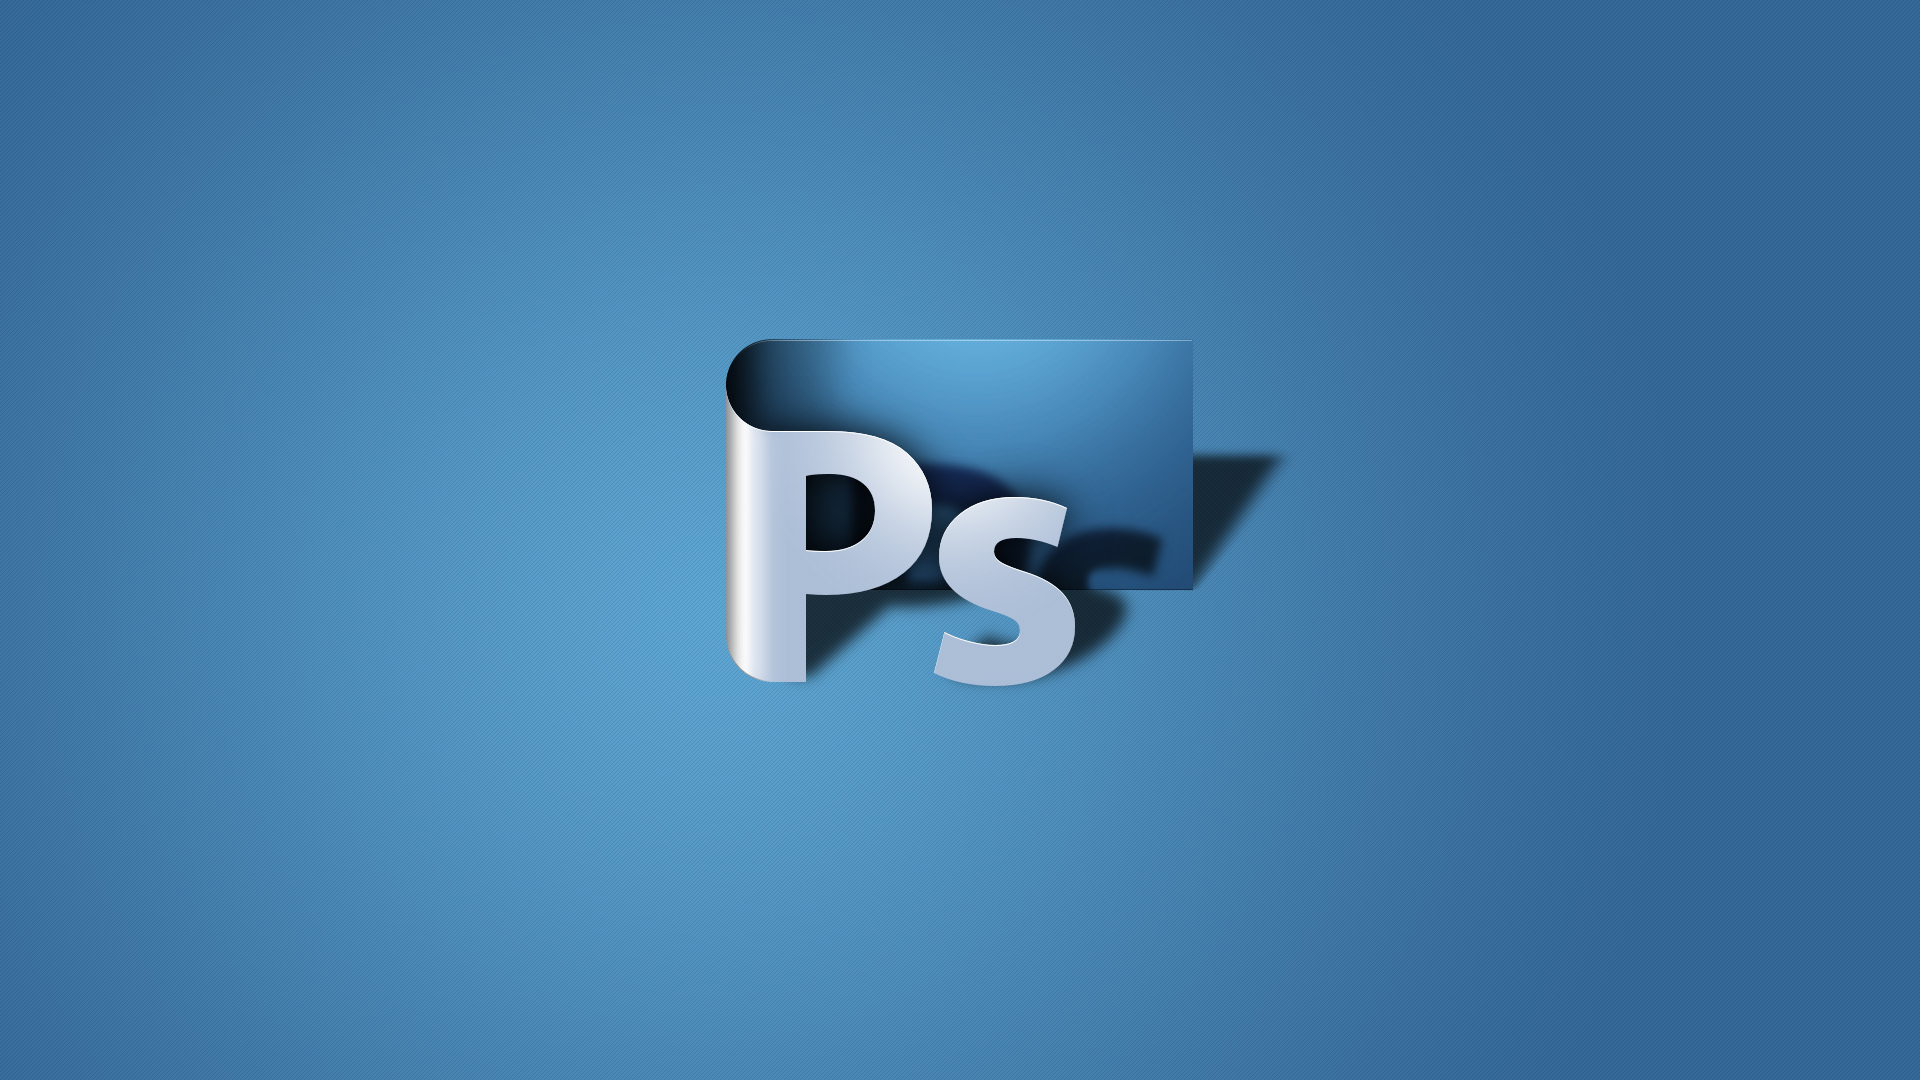 Background, Adobe Photoshop Logo And Free 3d Abstract - Photoshop Logo Background Hd - HD Wallpaper 